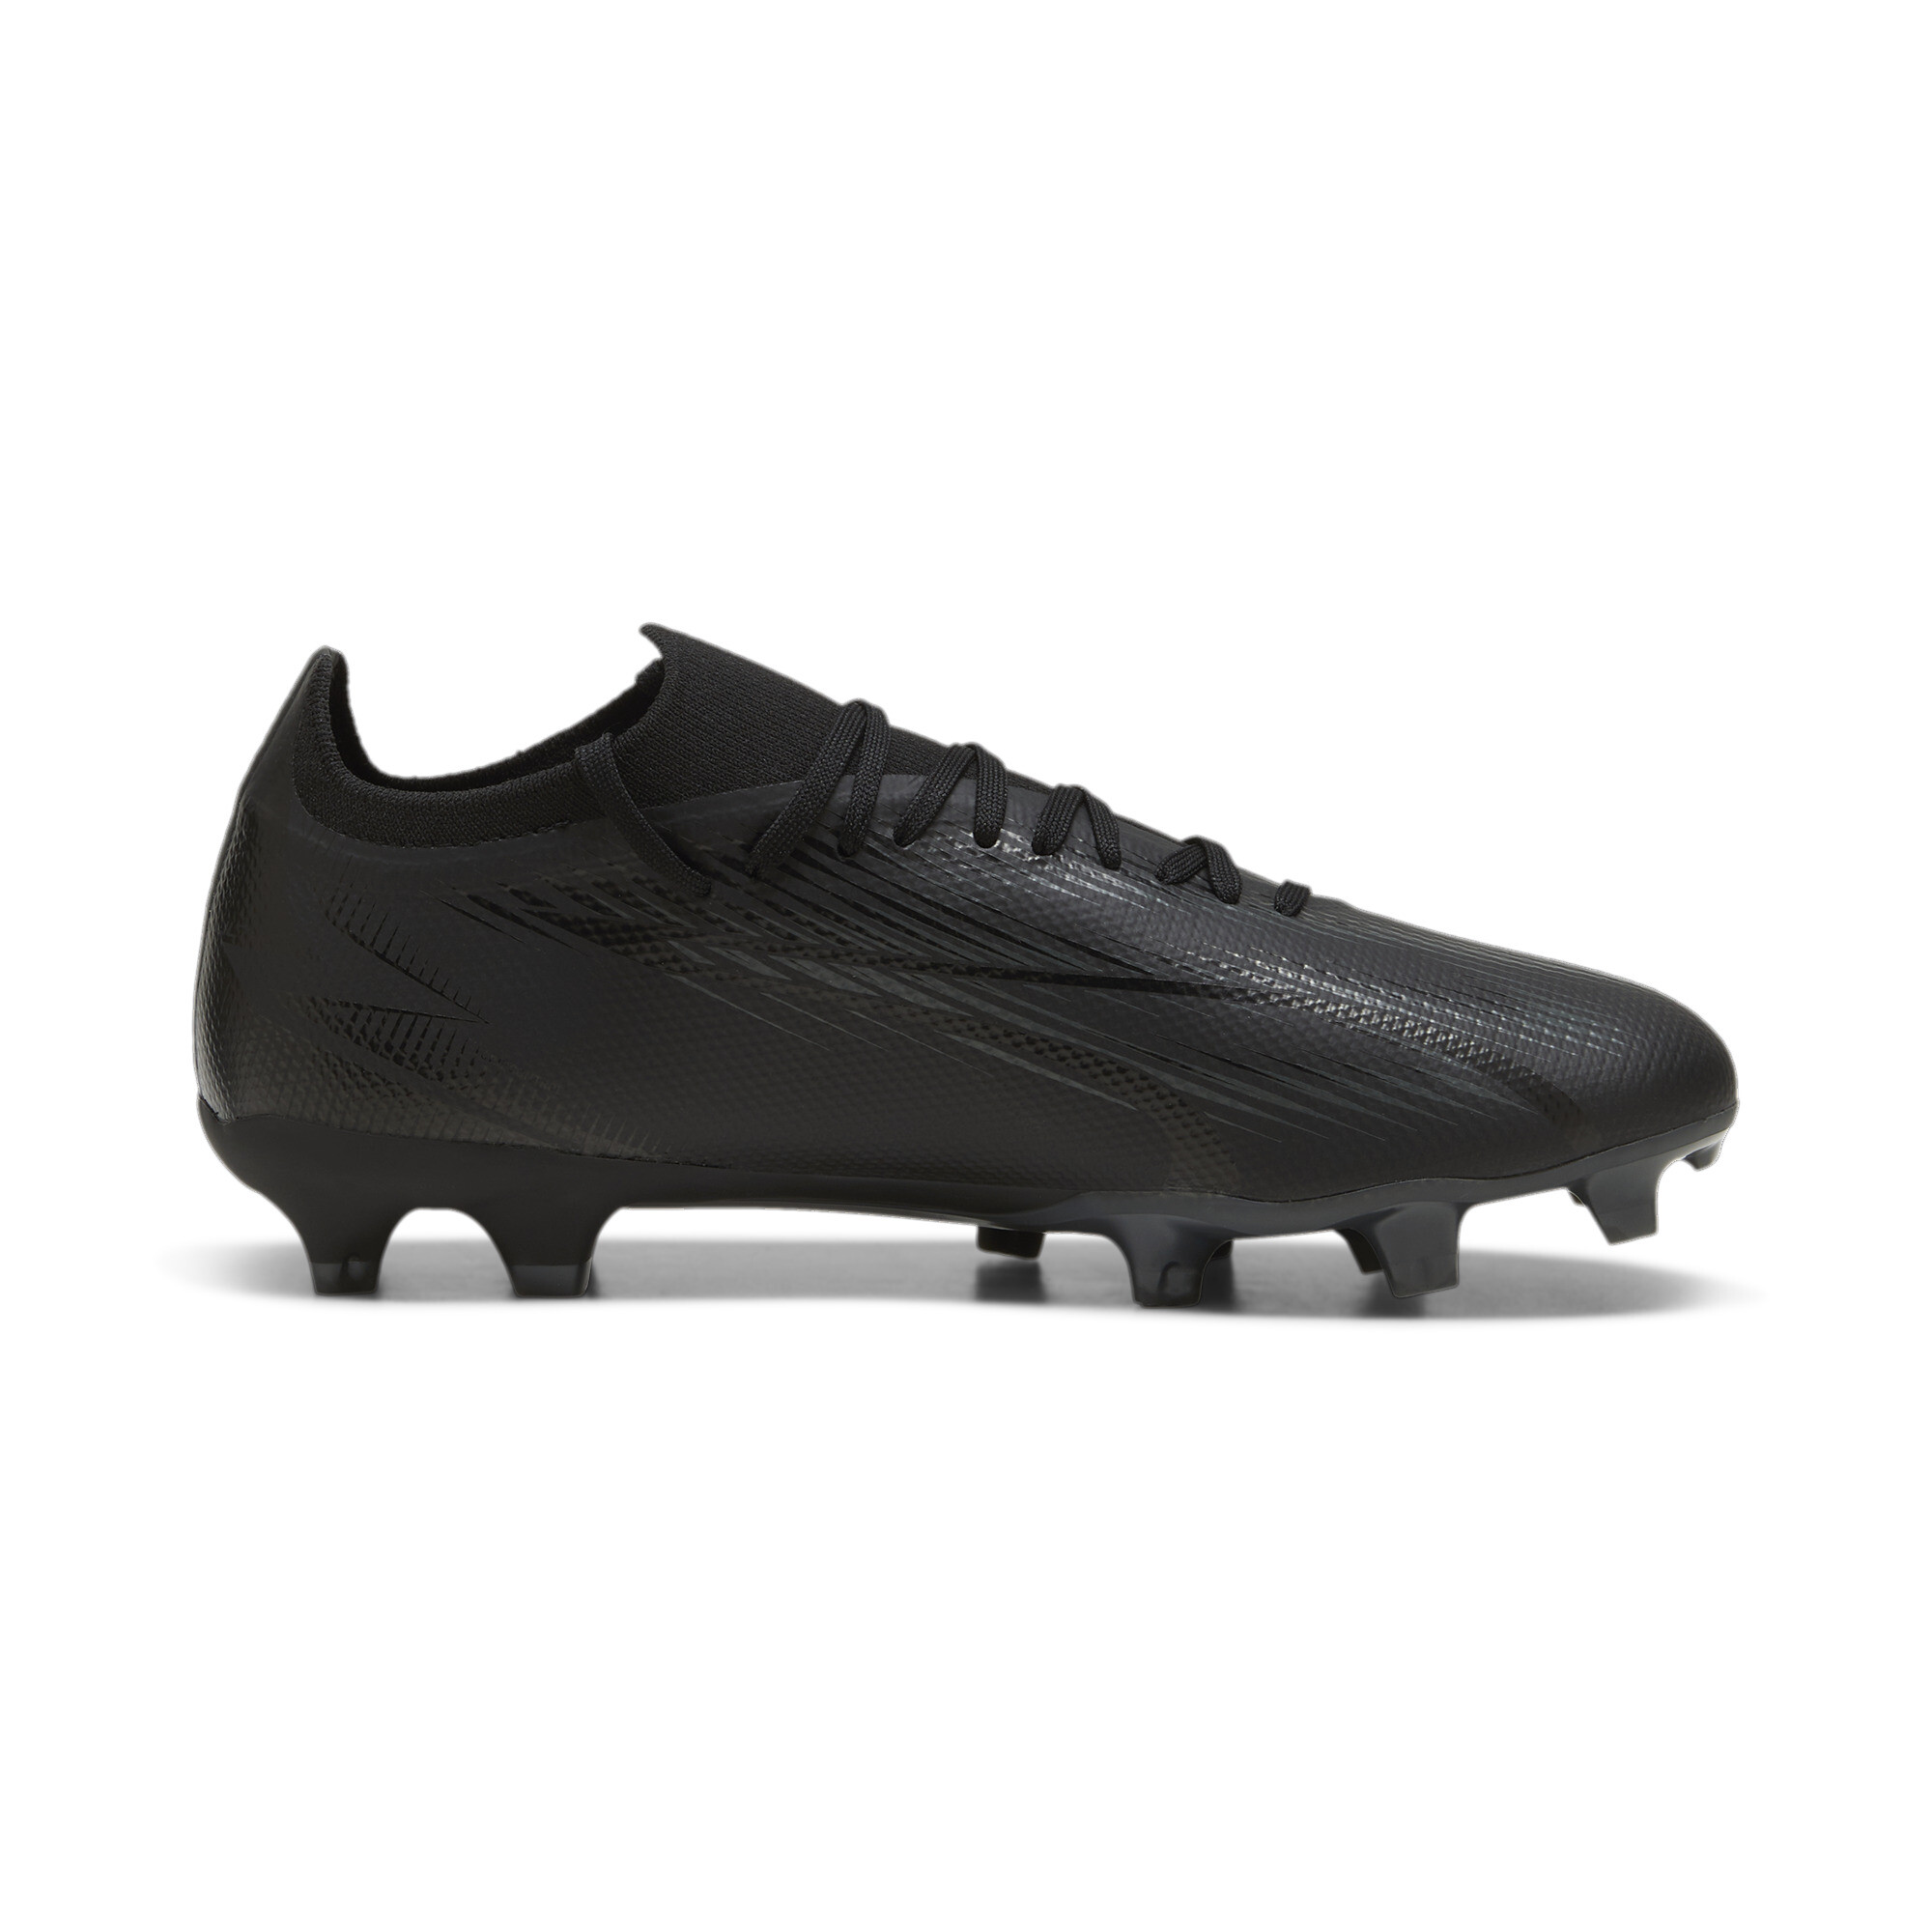 Men's PUMA ULTRA MATCH FG/AG Football Boots In Black, Size EU 43